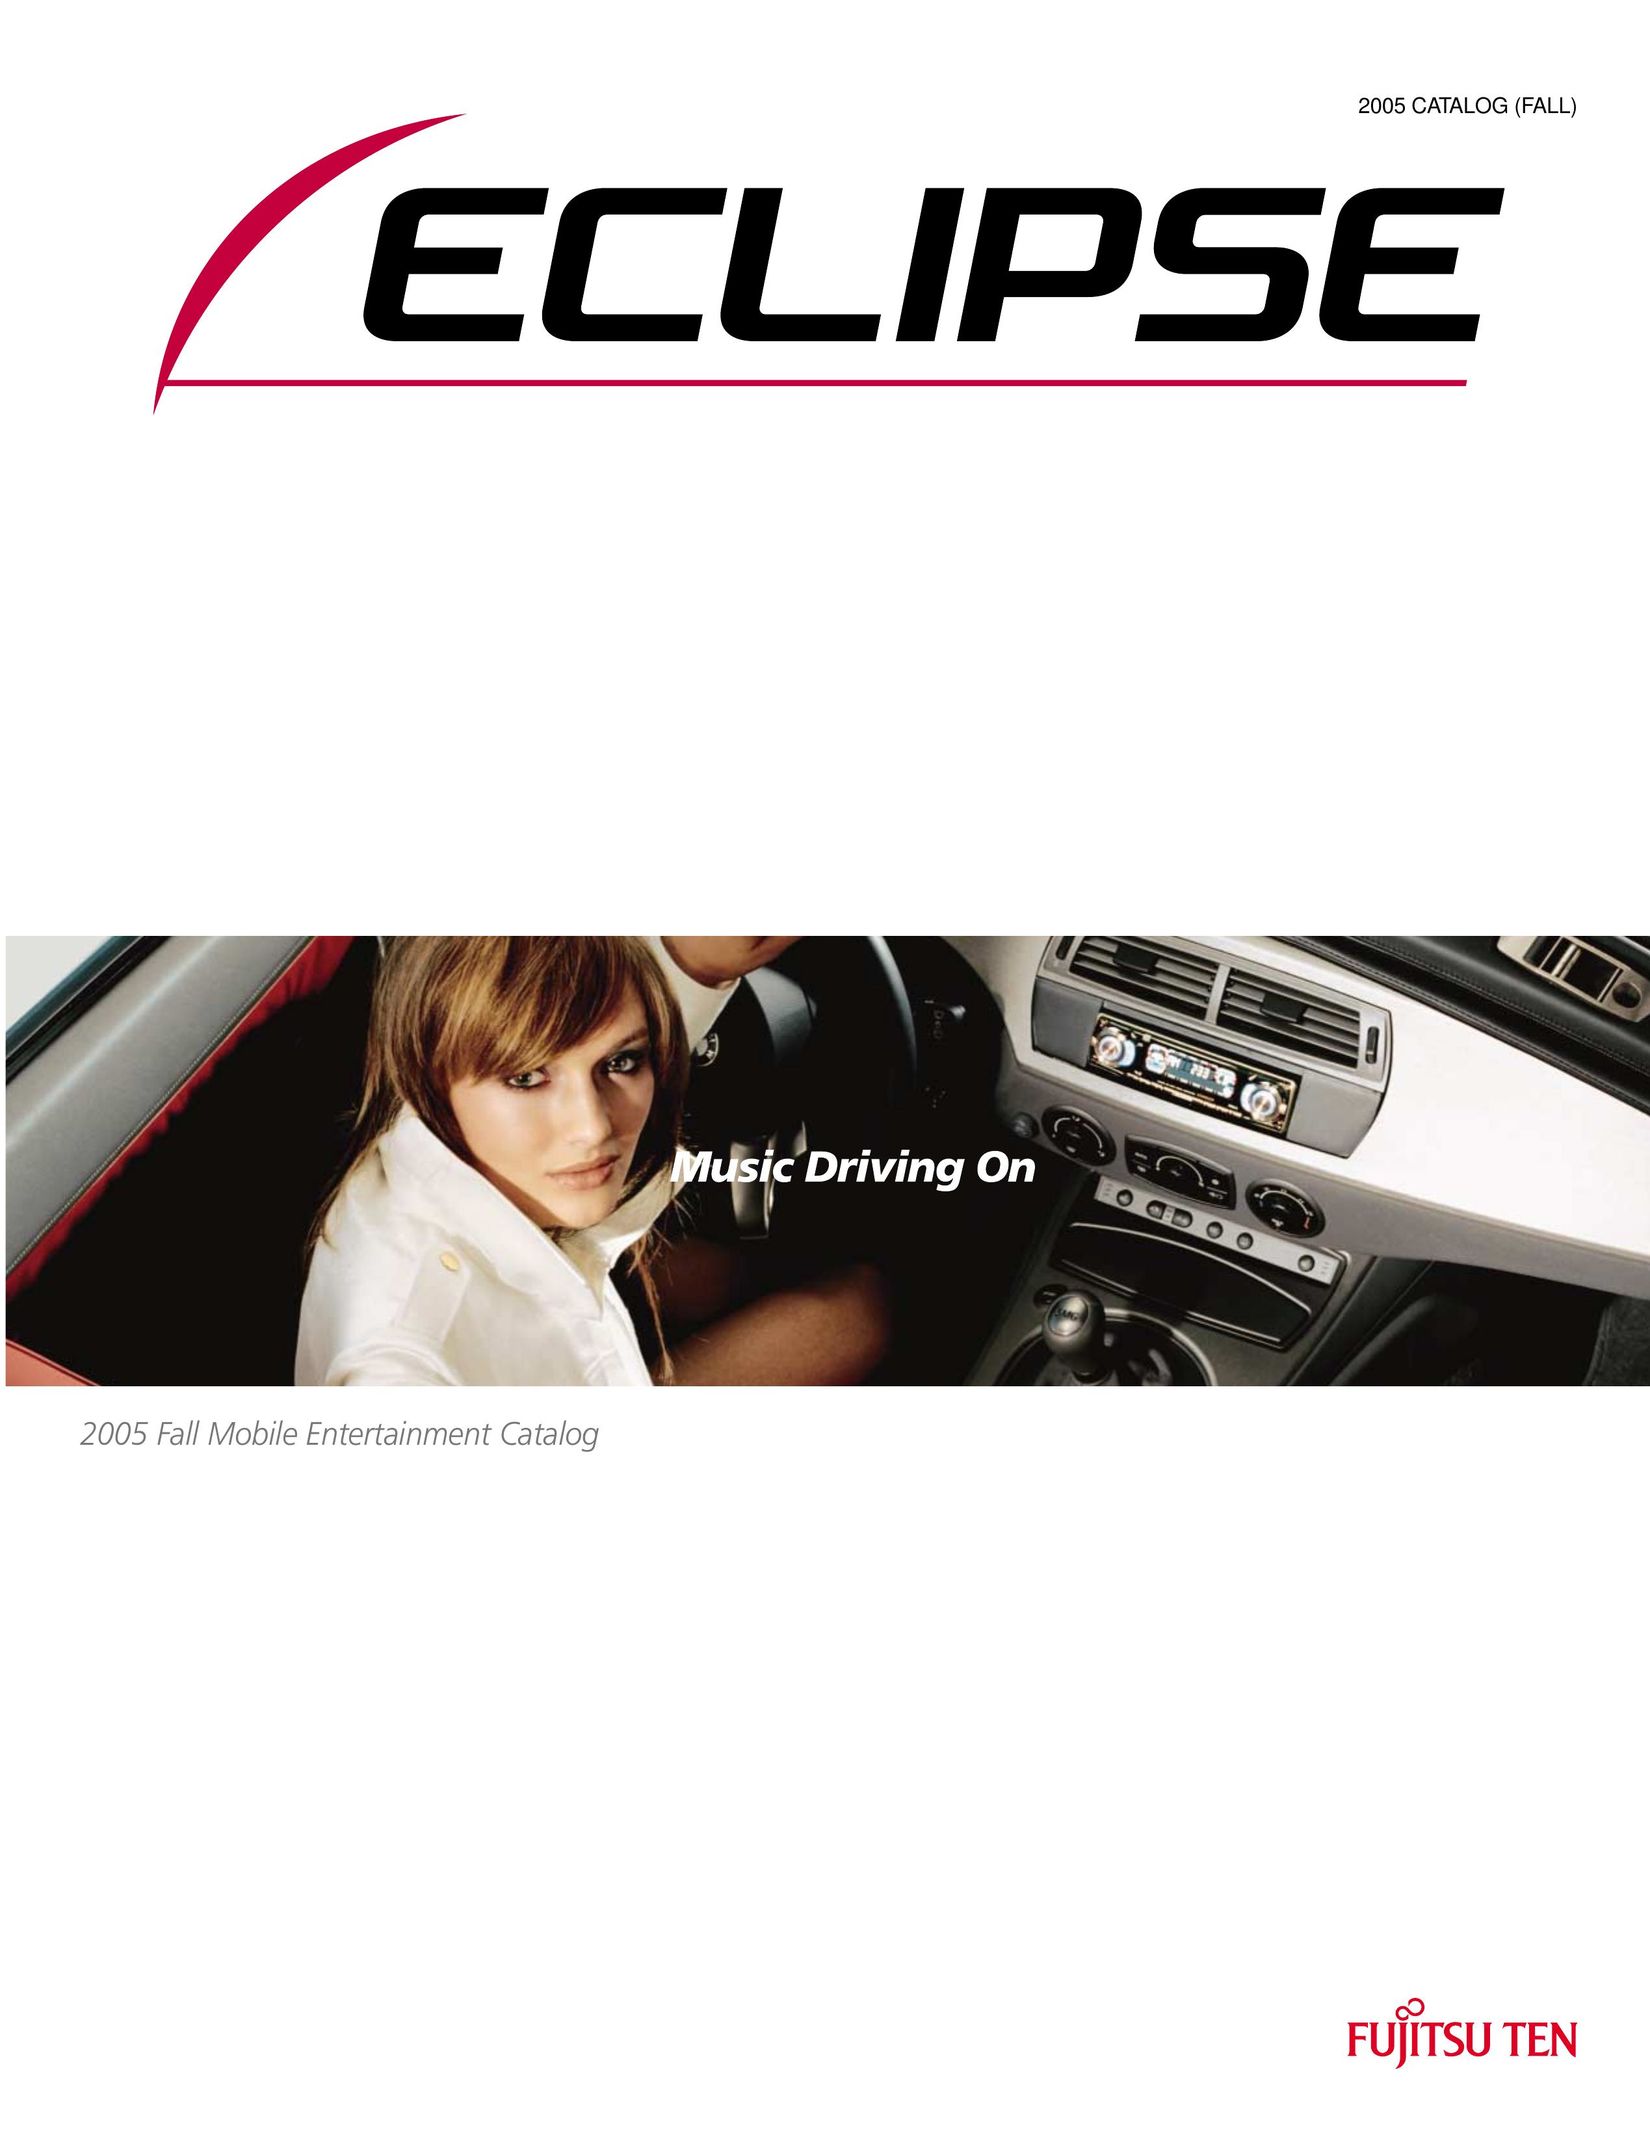 Eclipse - Fujitsu Ten AVN5495 MP3 Player User Manual